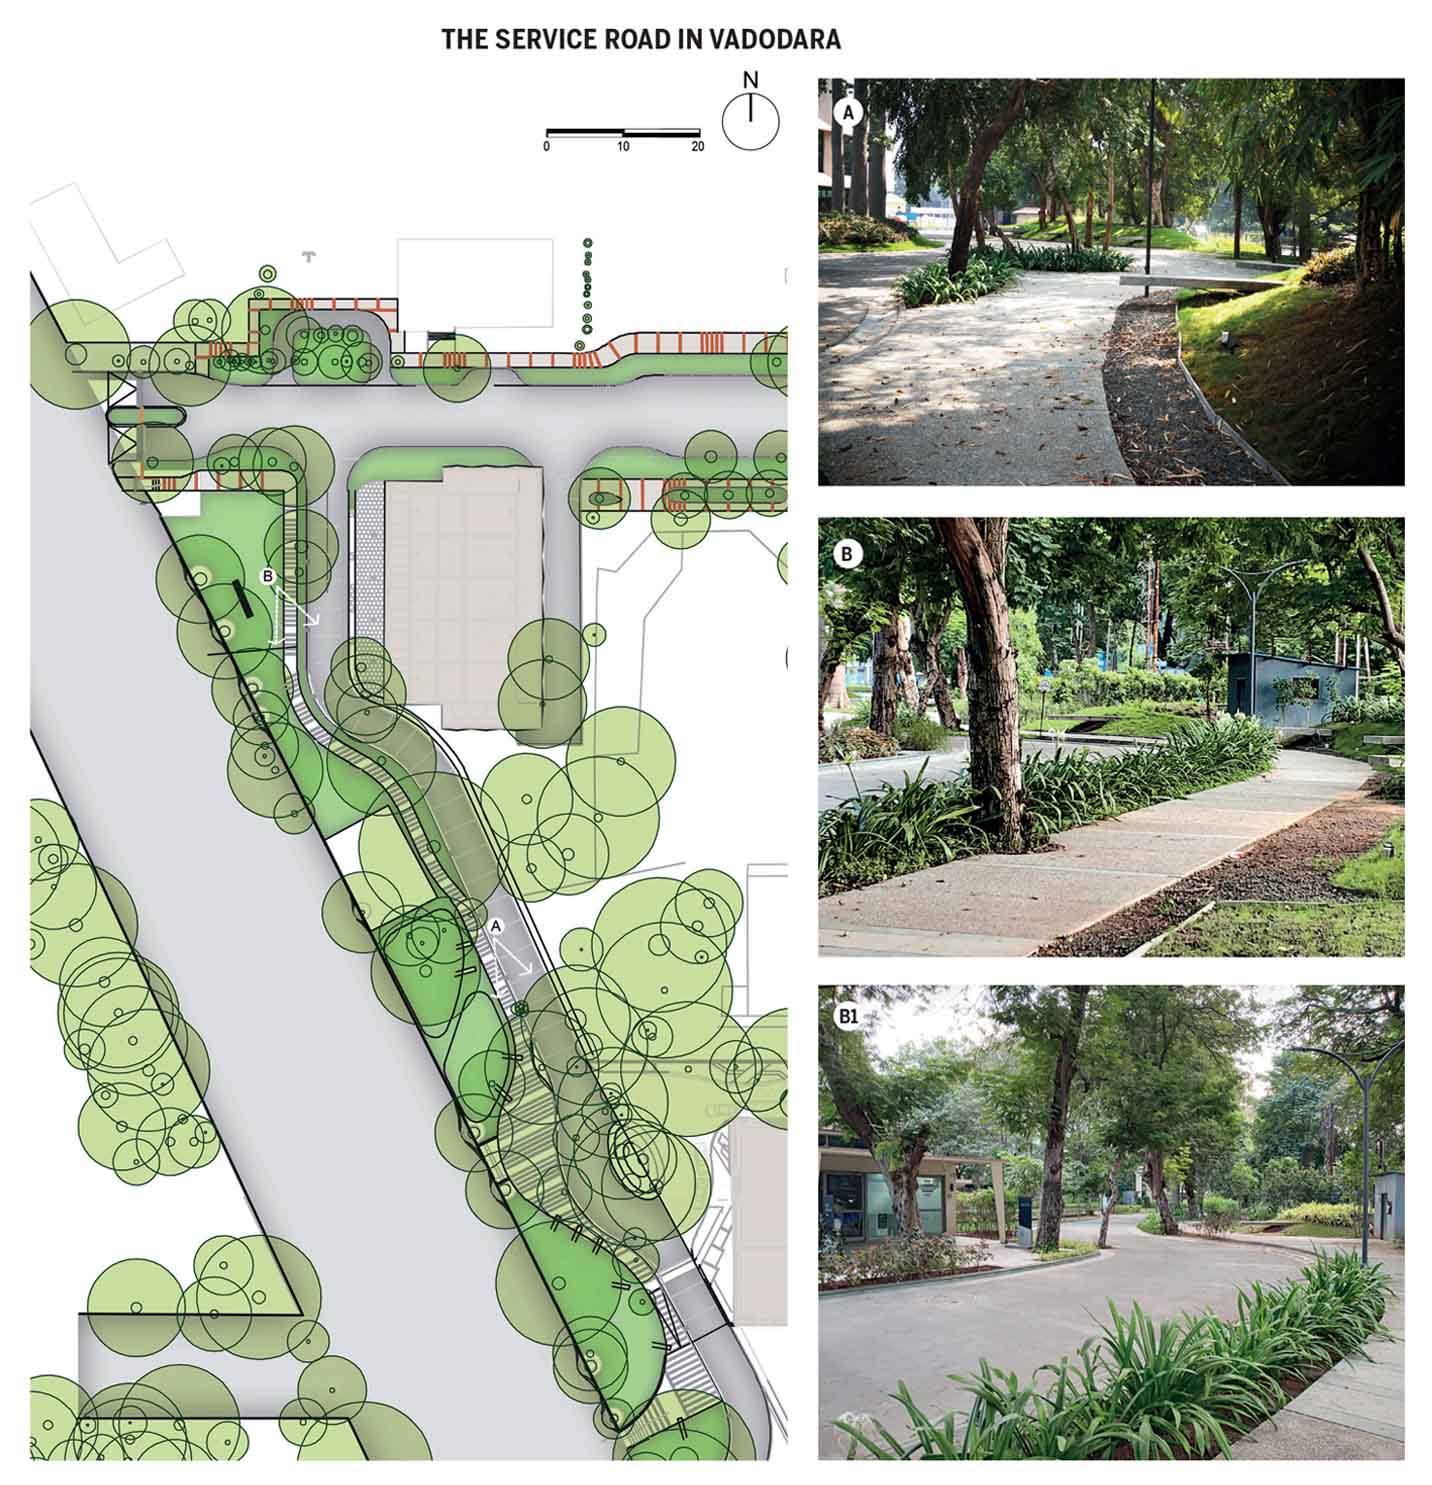 wiggling-roads-other-design-strategies-save-trees-service-road-vadodara